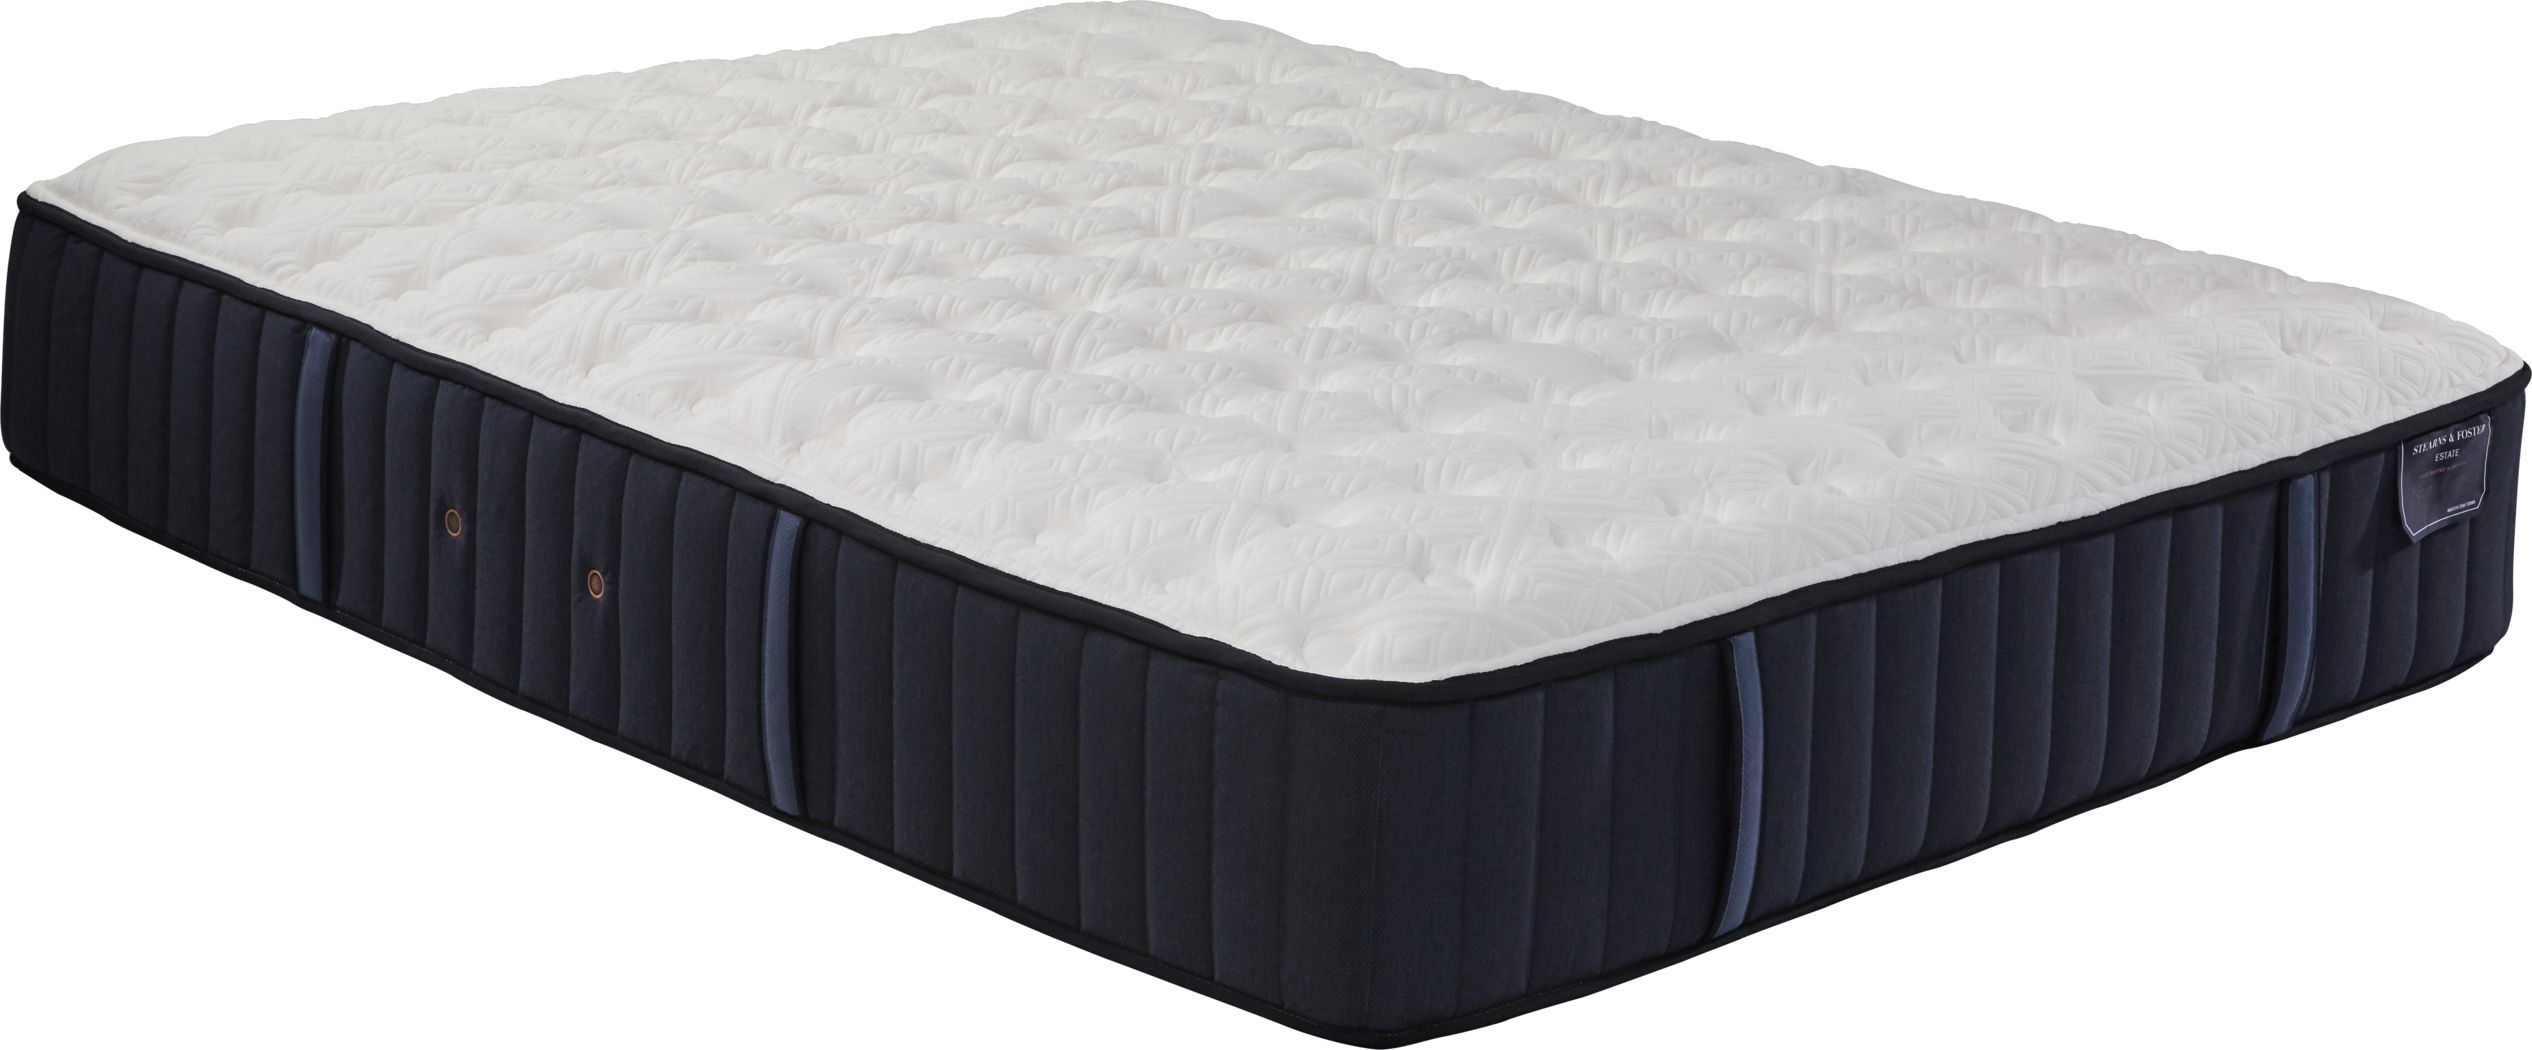 stearns & foster hurston luxury plush queen mattress